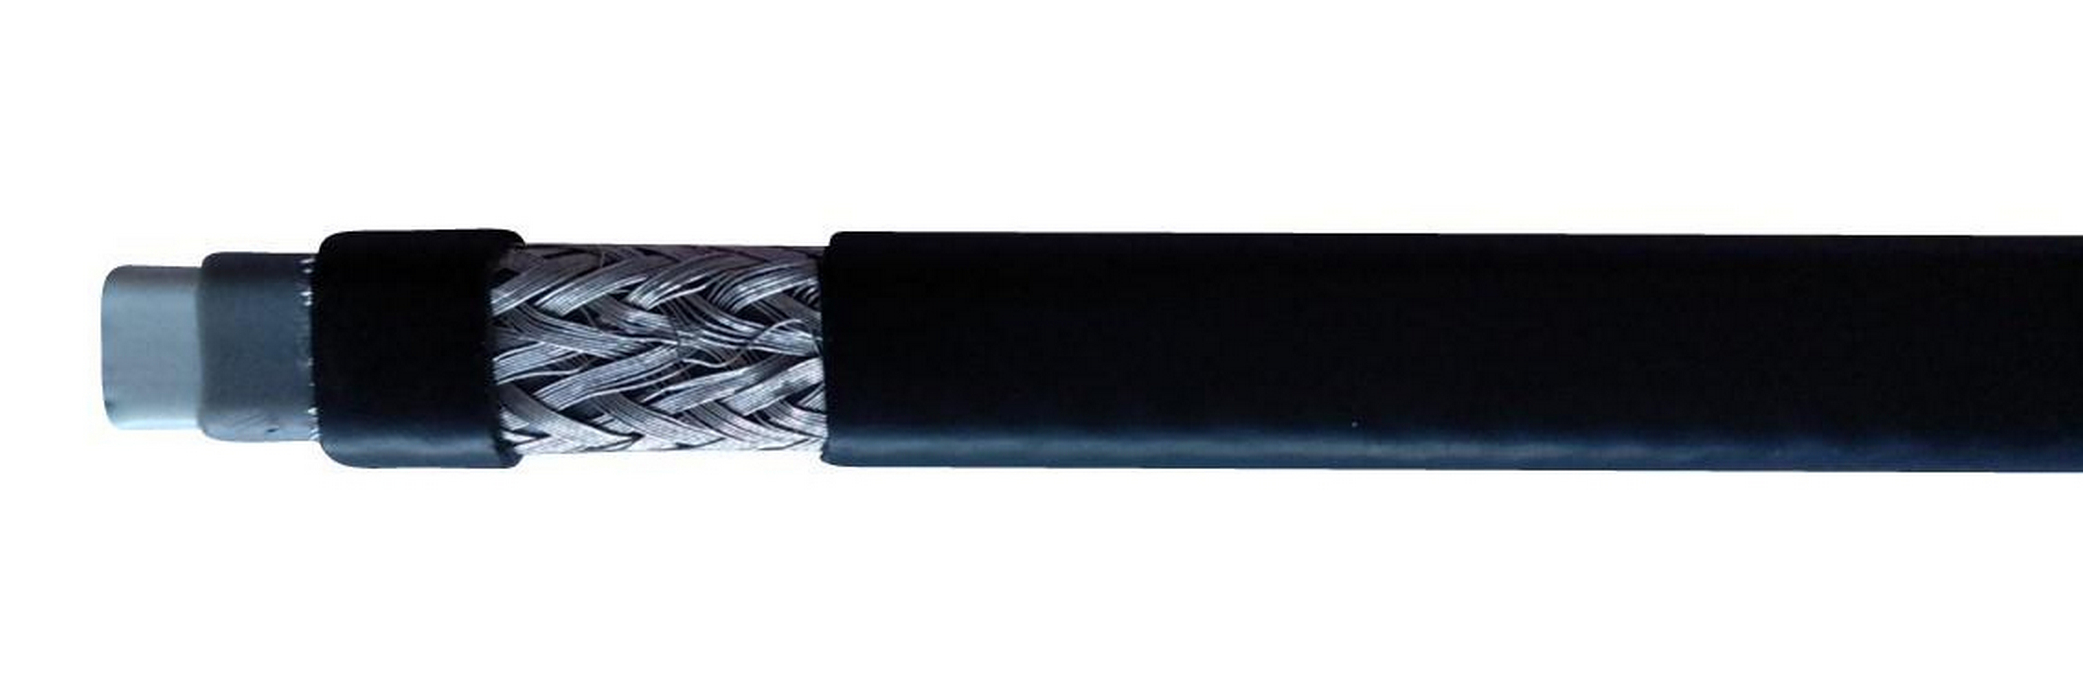 Саморегулирующийся кабель Ryxon LSR-33-CR (1 м.п.) цена 289.00 грн - фотография 2